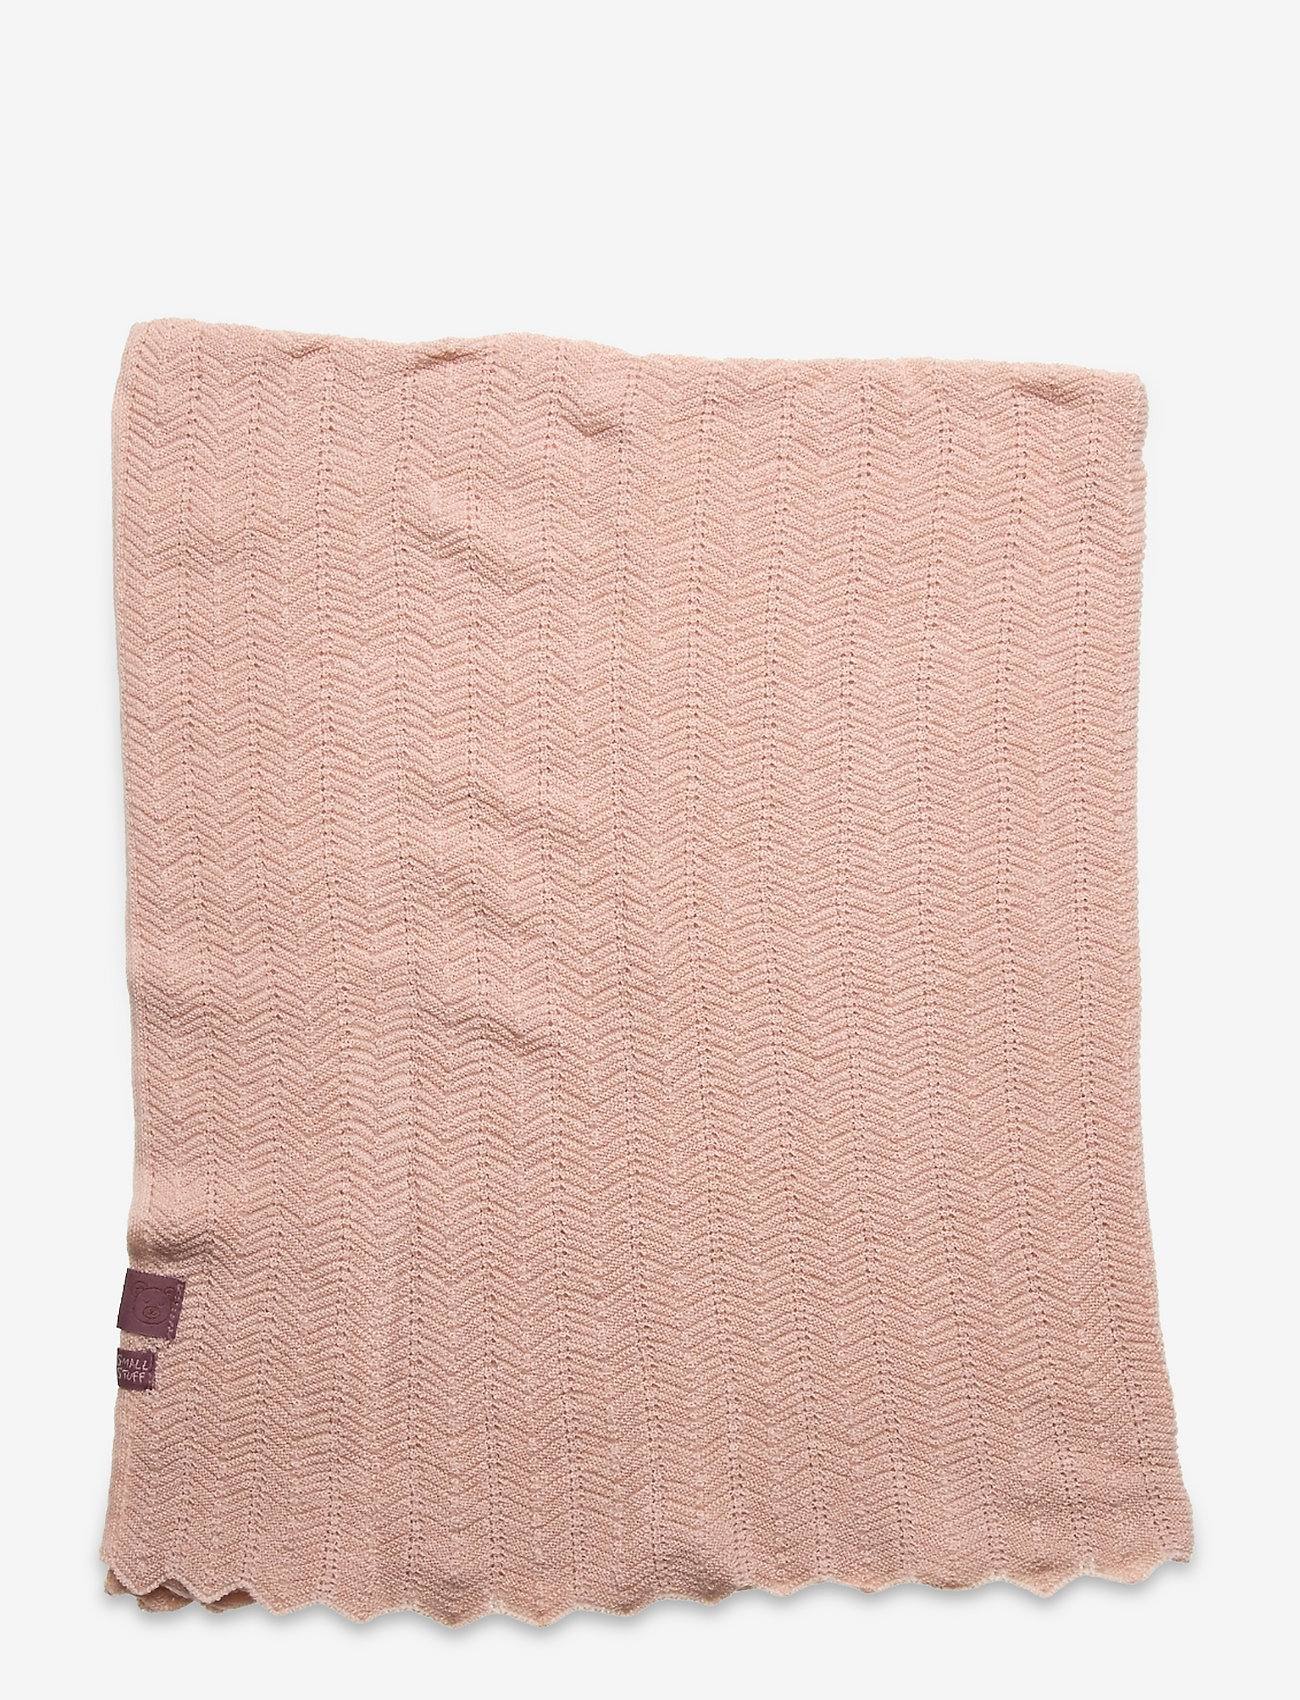 Smallstuff - Baby blanket, fishbone merino WOOL, soft rose - miegam - soft rose - 1